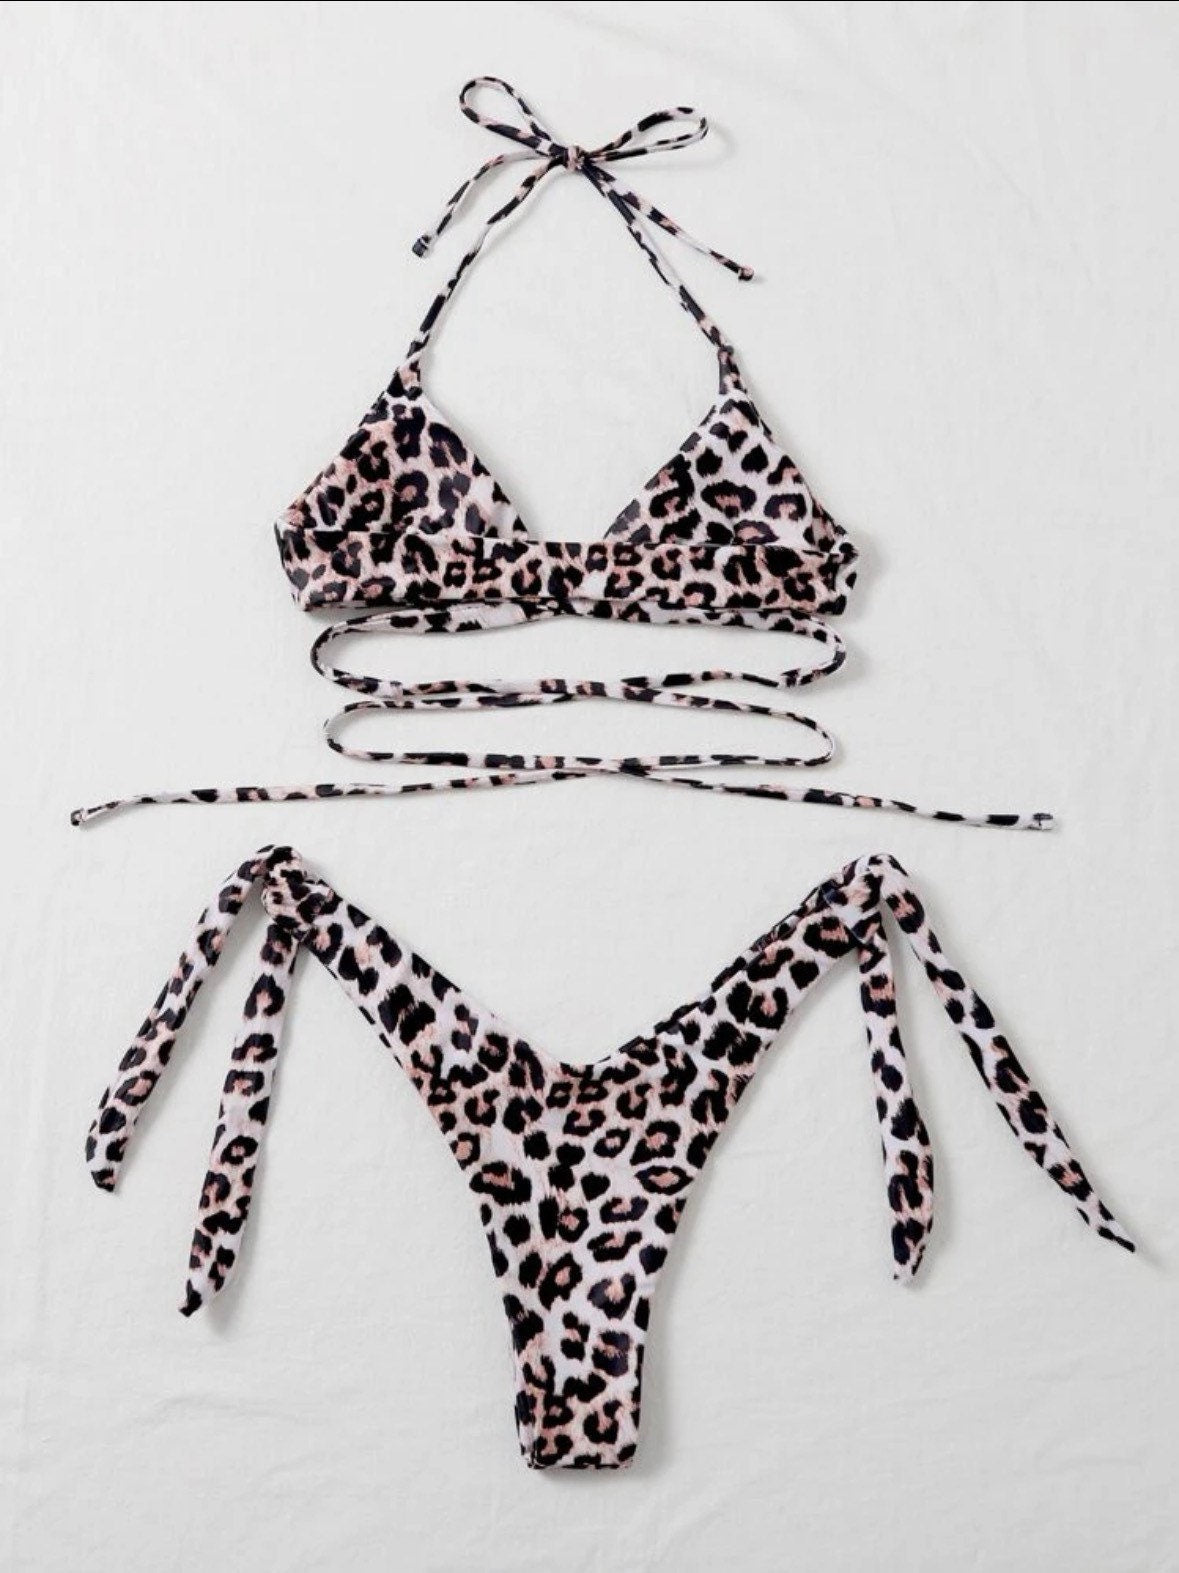 The LauLau Leopard Criss Cross Tie Around thong bikini leopard cheetah print details triangle top tie and bottoms swimsuit set